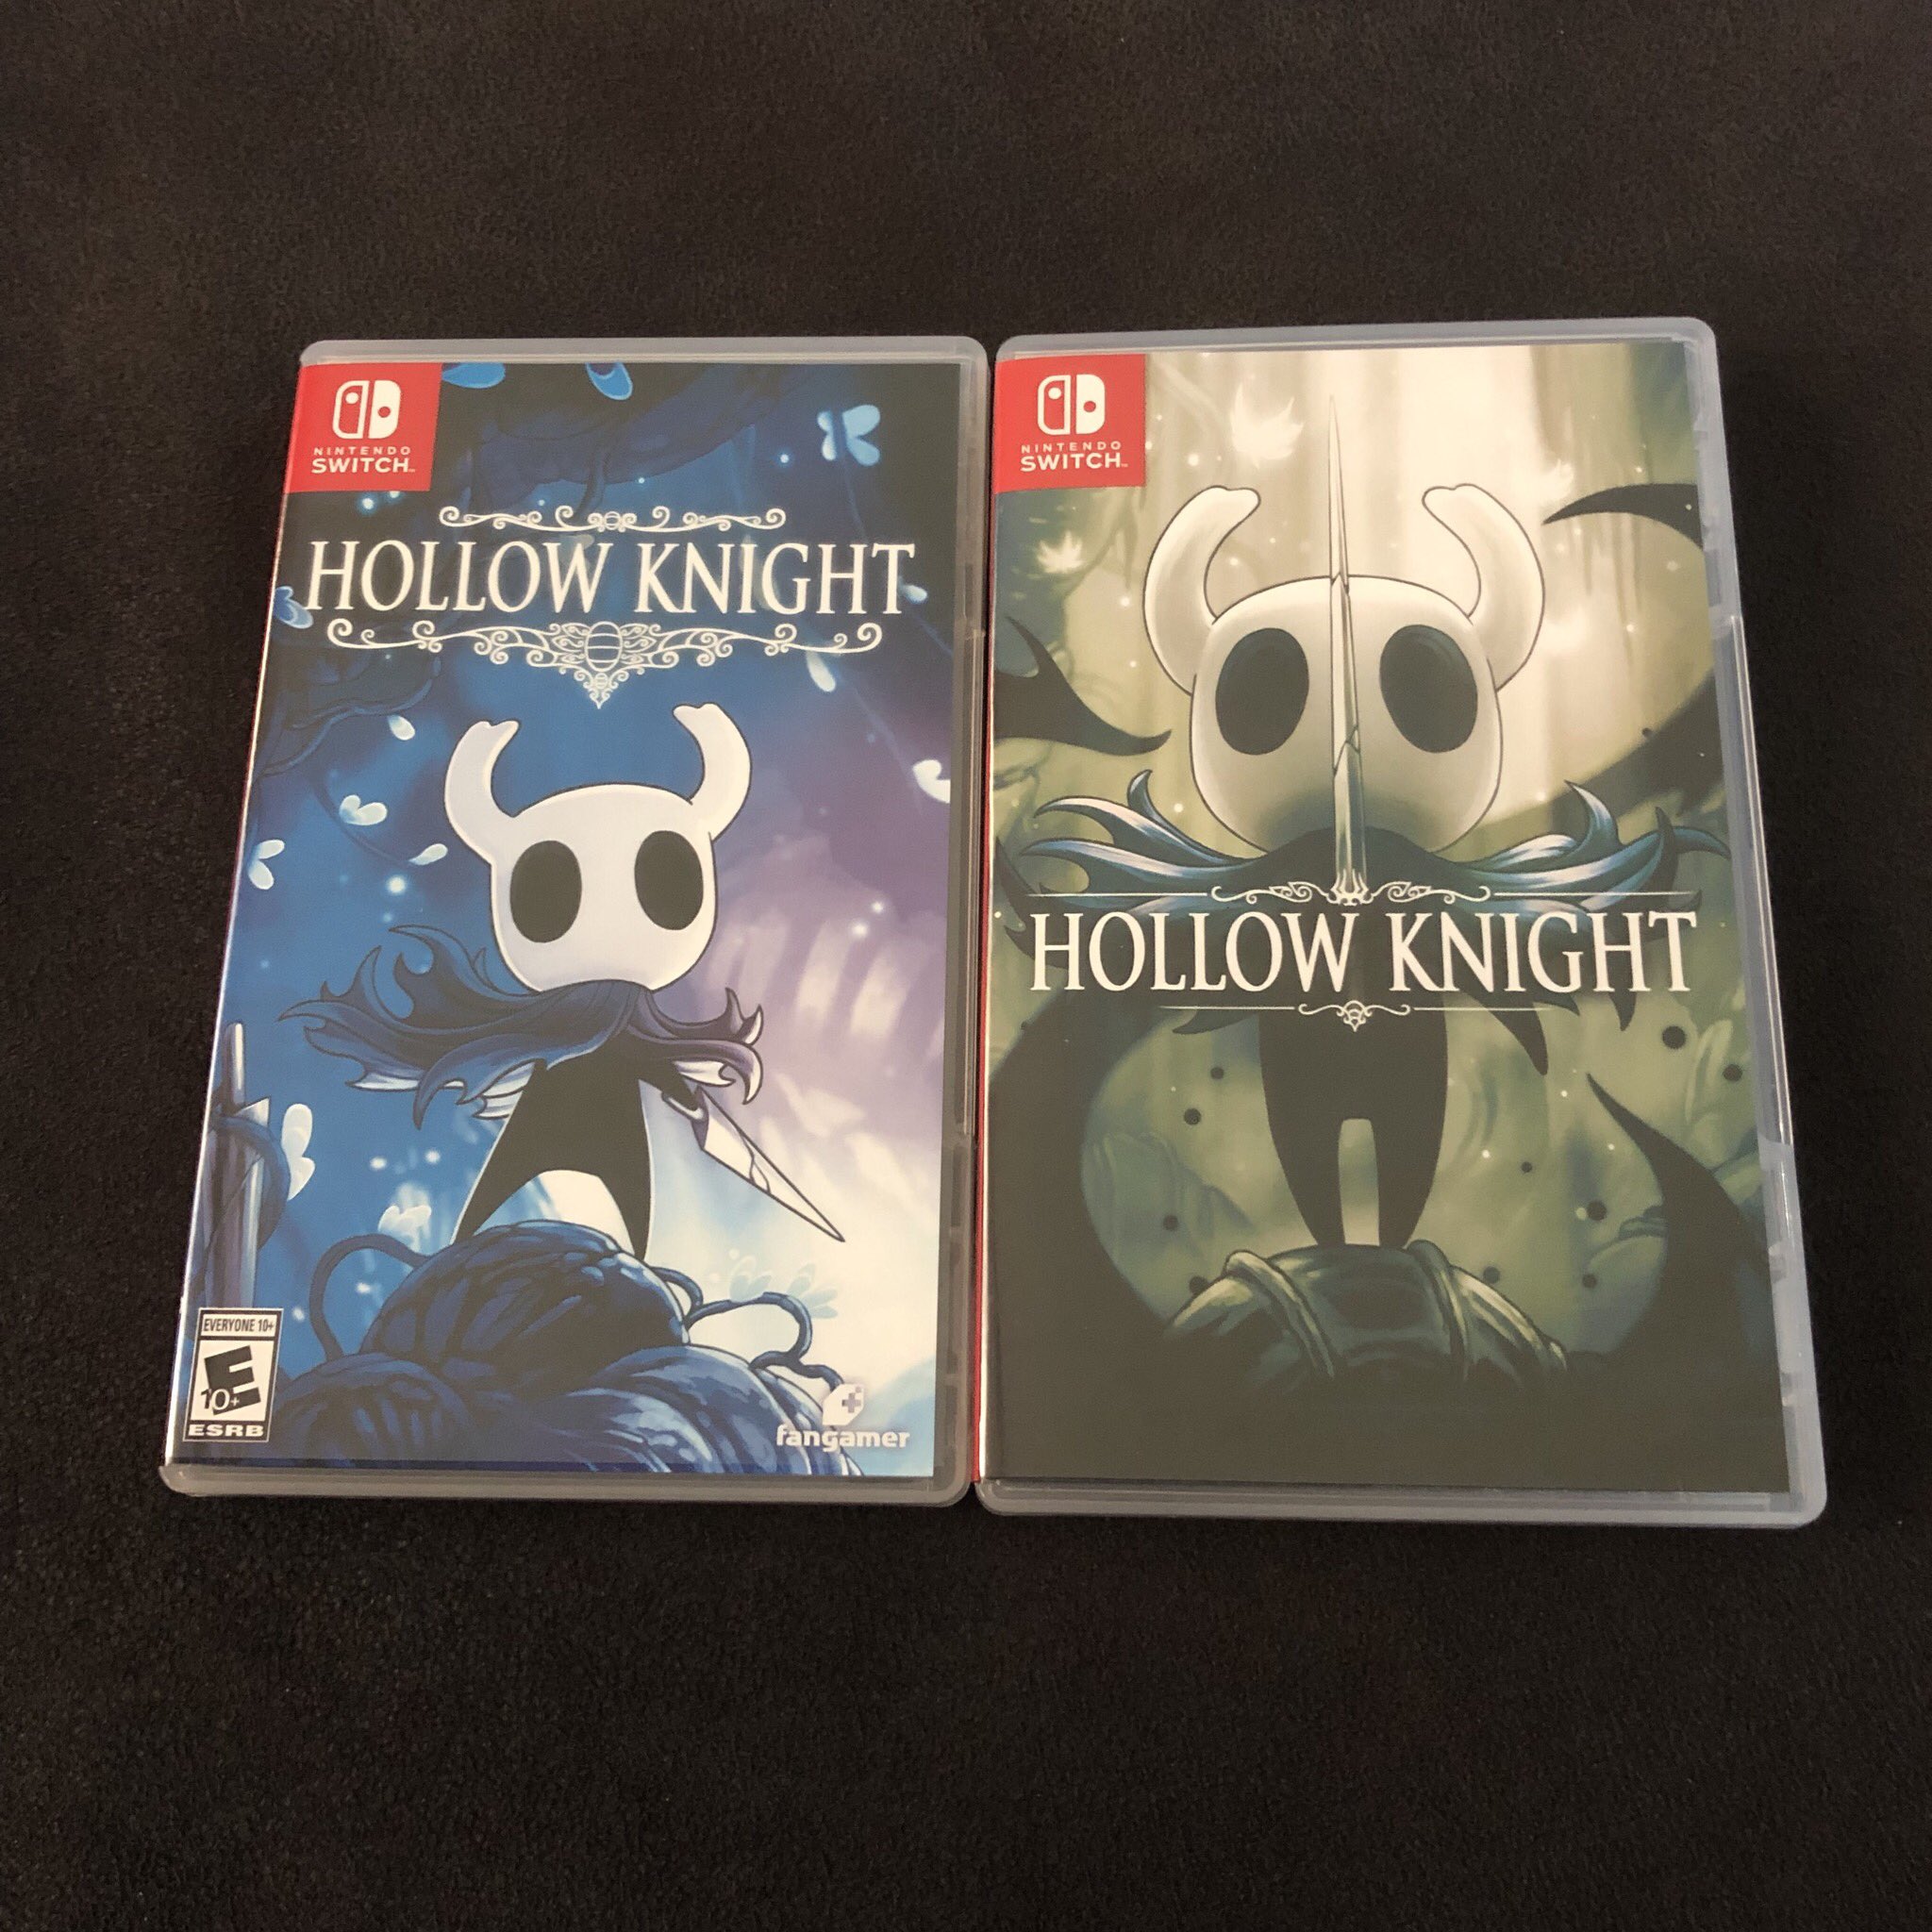 Matthew Griffin on X: Reminder if you got Hollow Knight (Nintendo